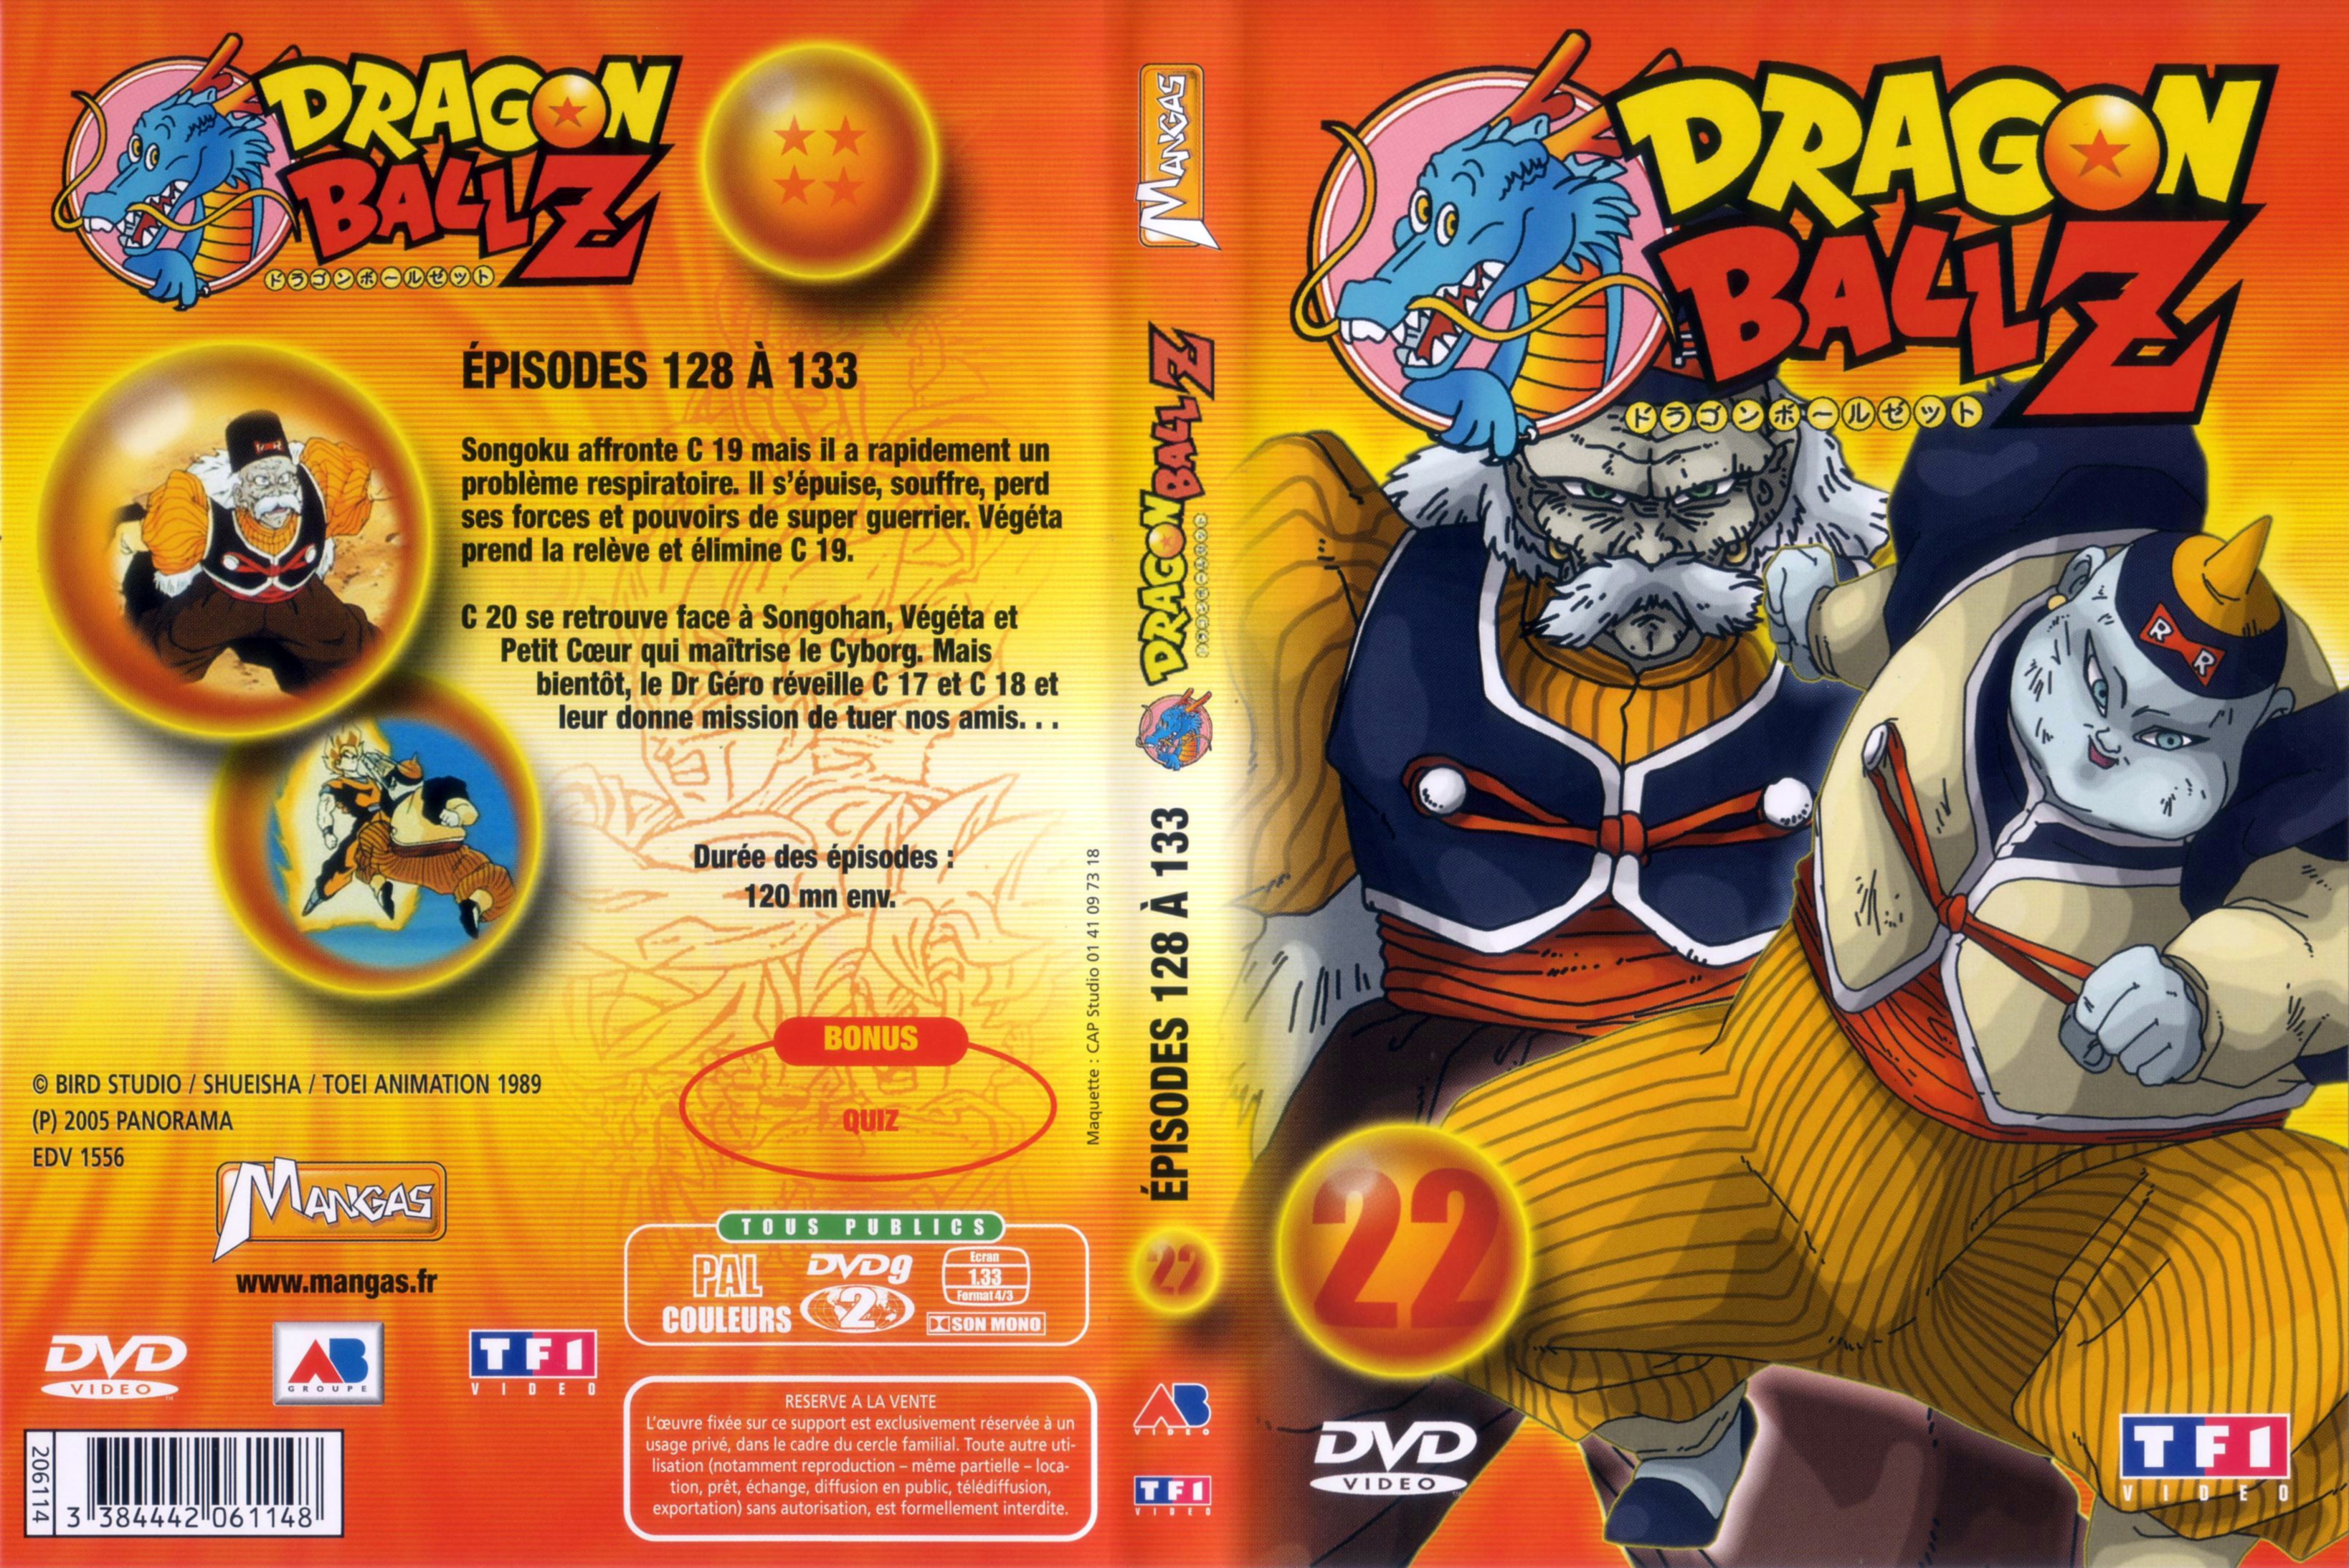 Jaquette DVD Dragon ball Z vol 22